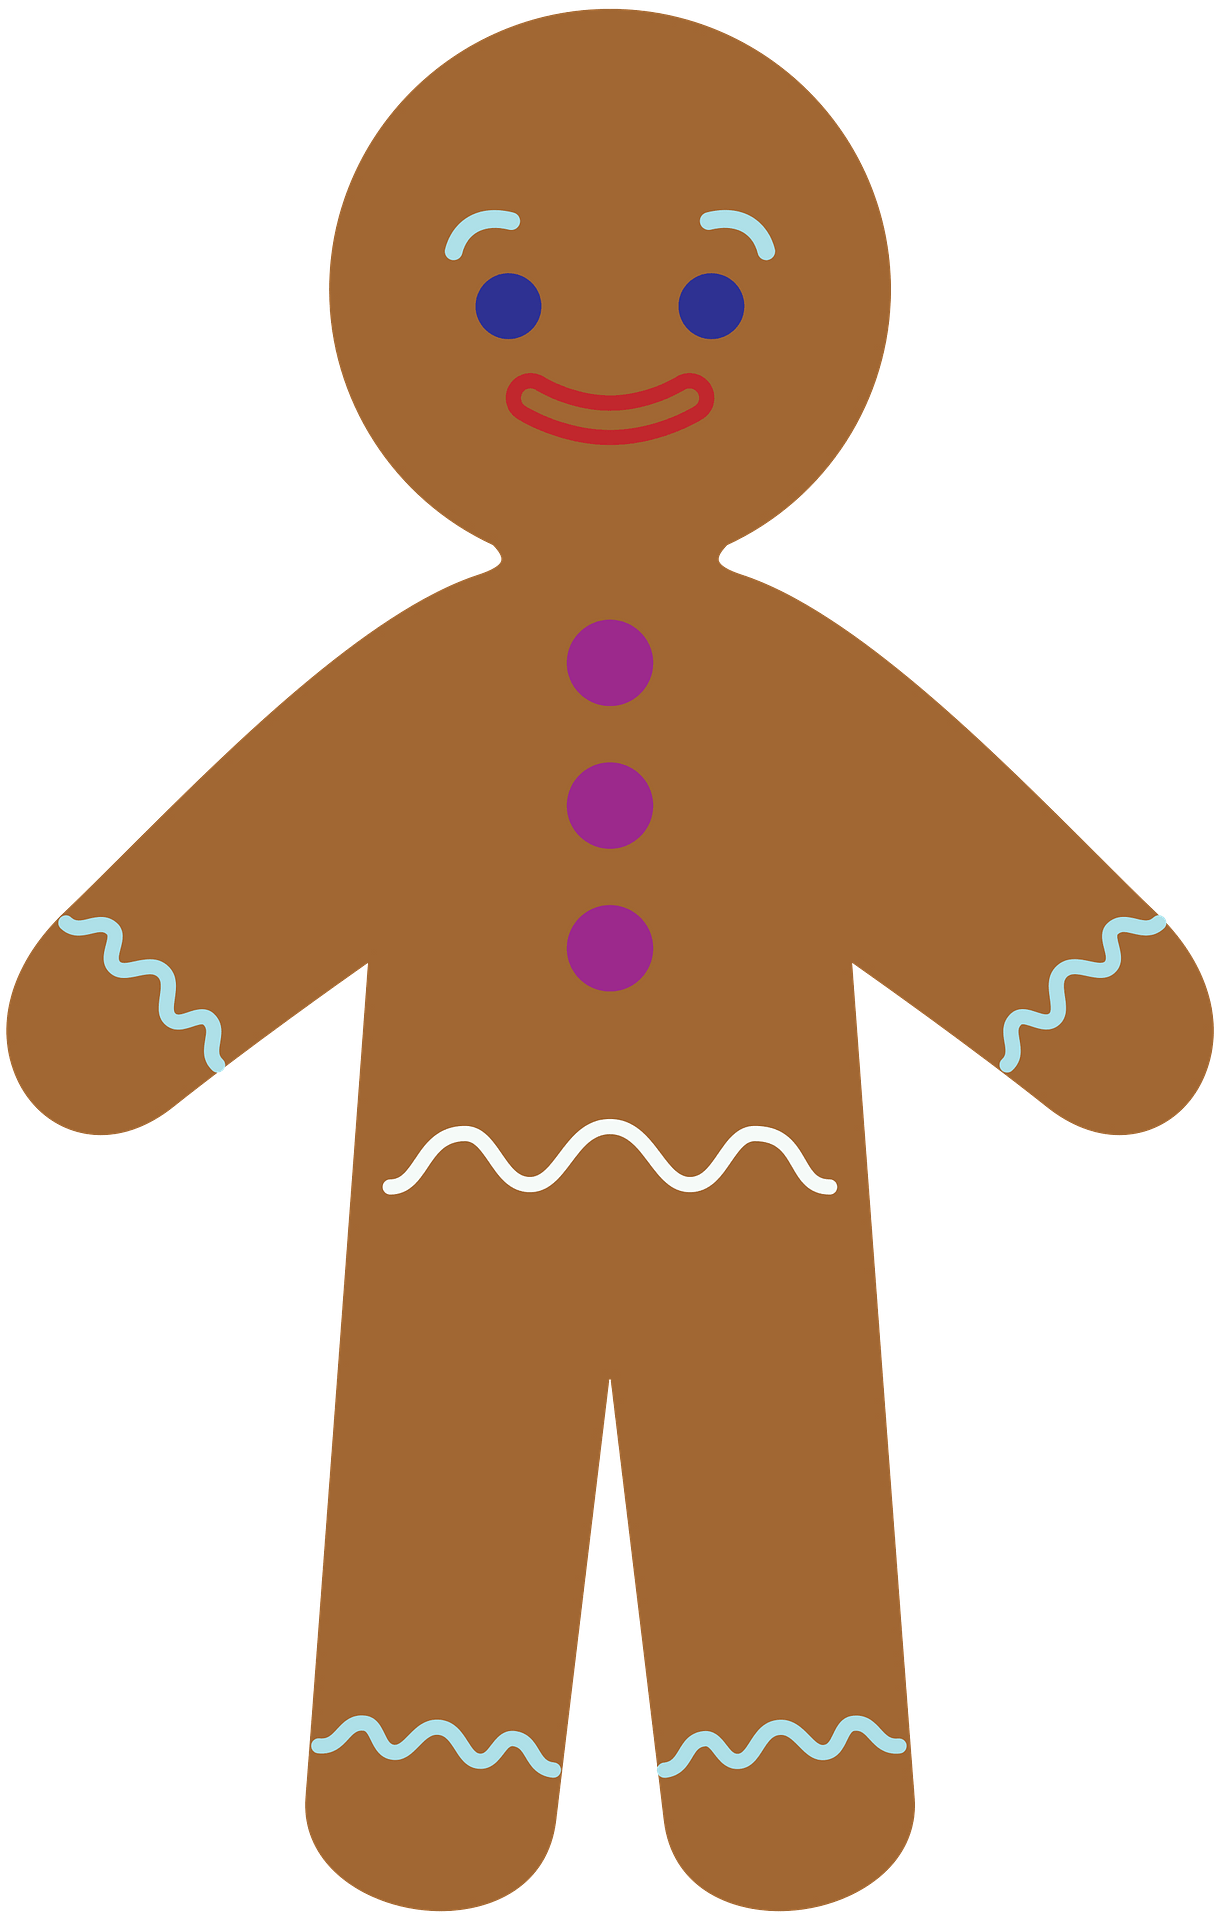 10-600-gingerbread-man-illustrations-royalty-free-vector-clip-art